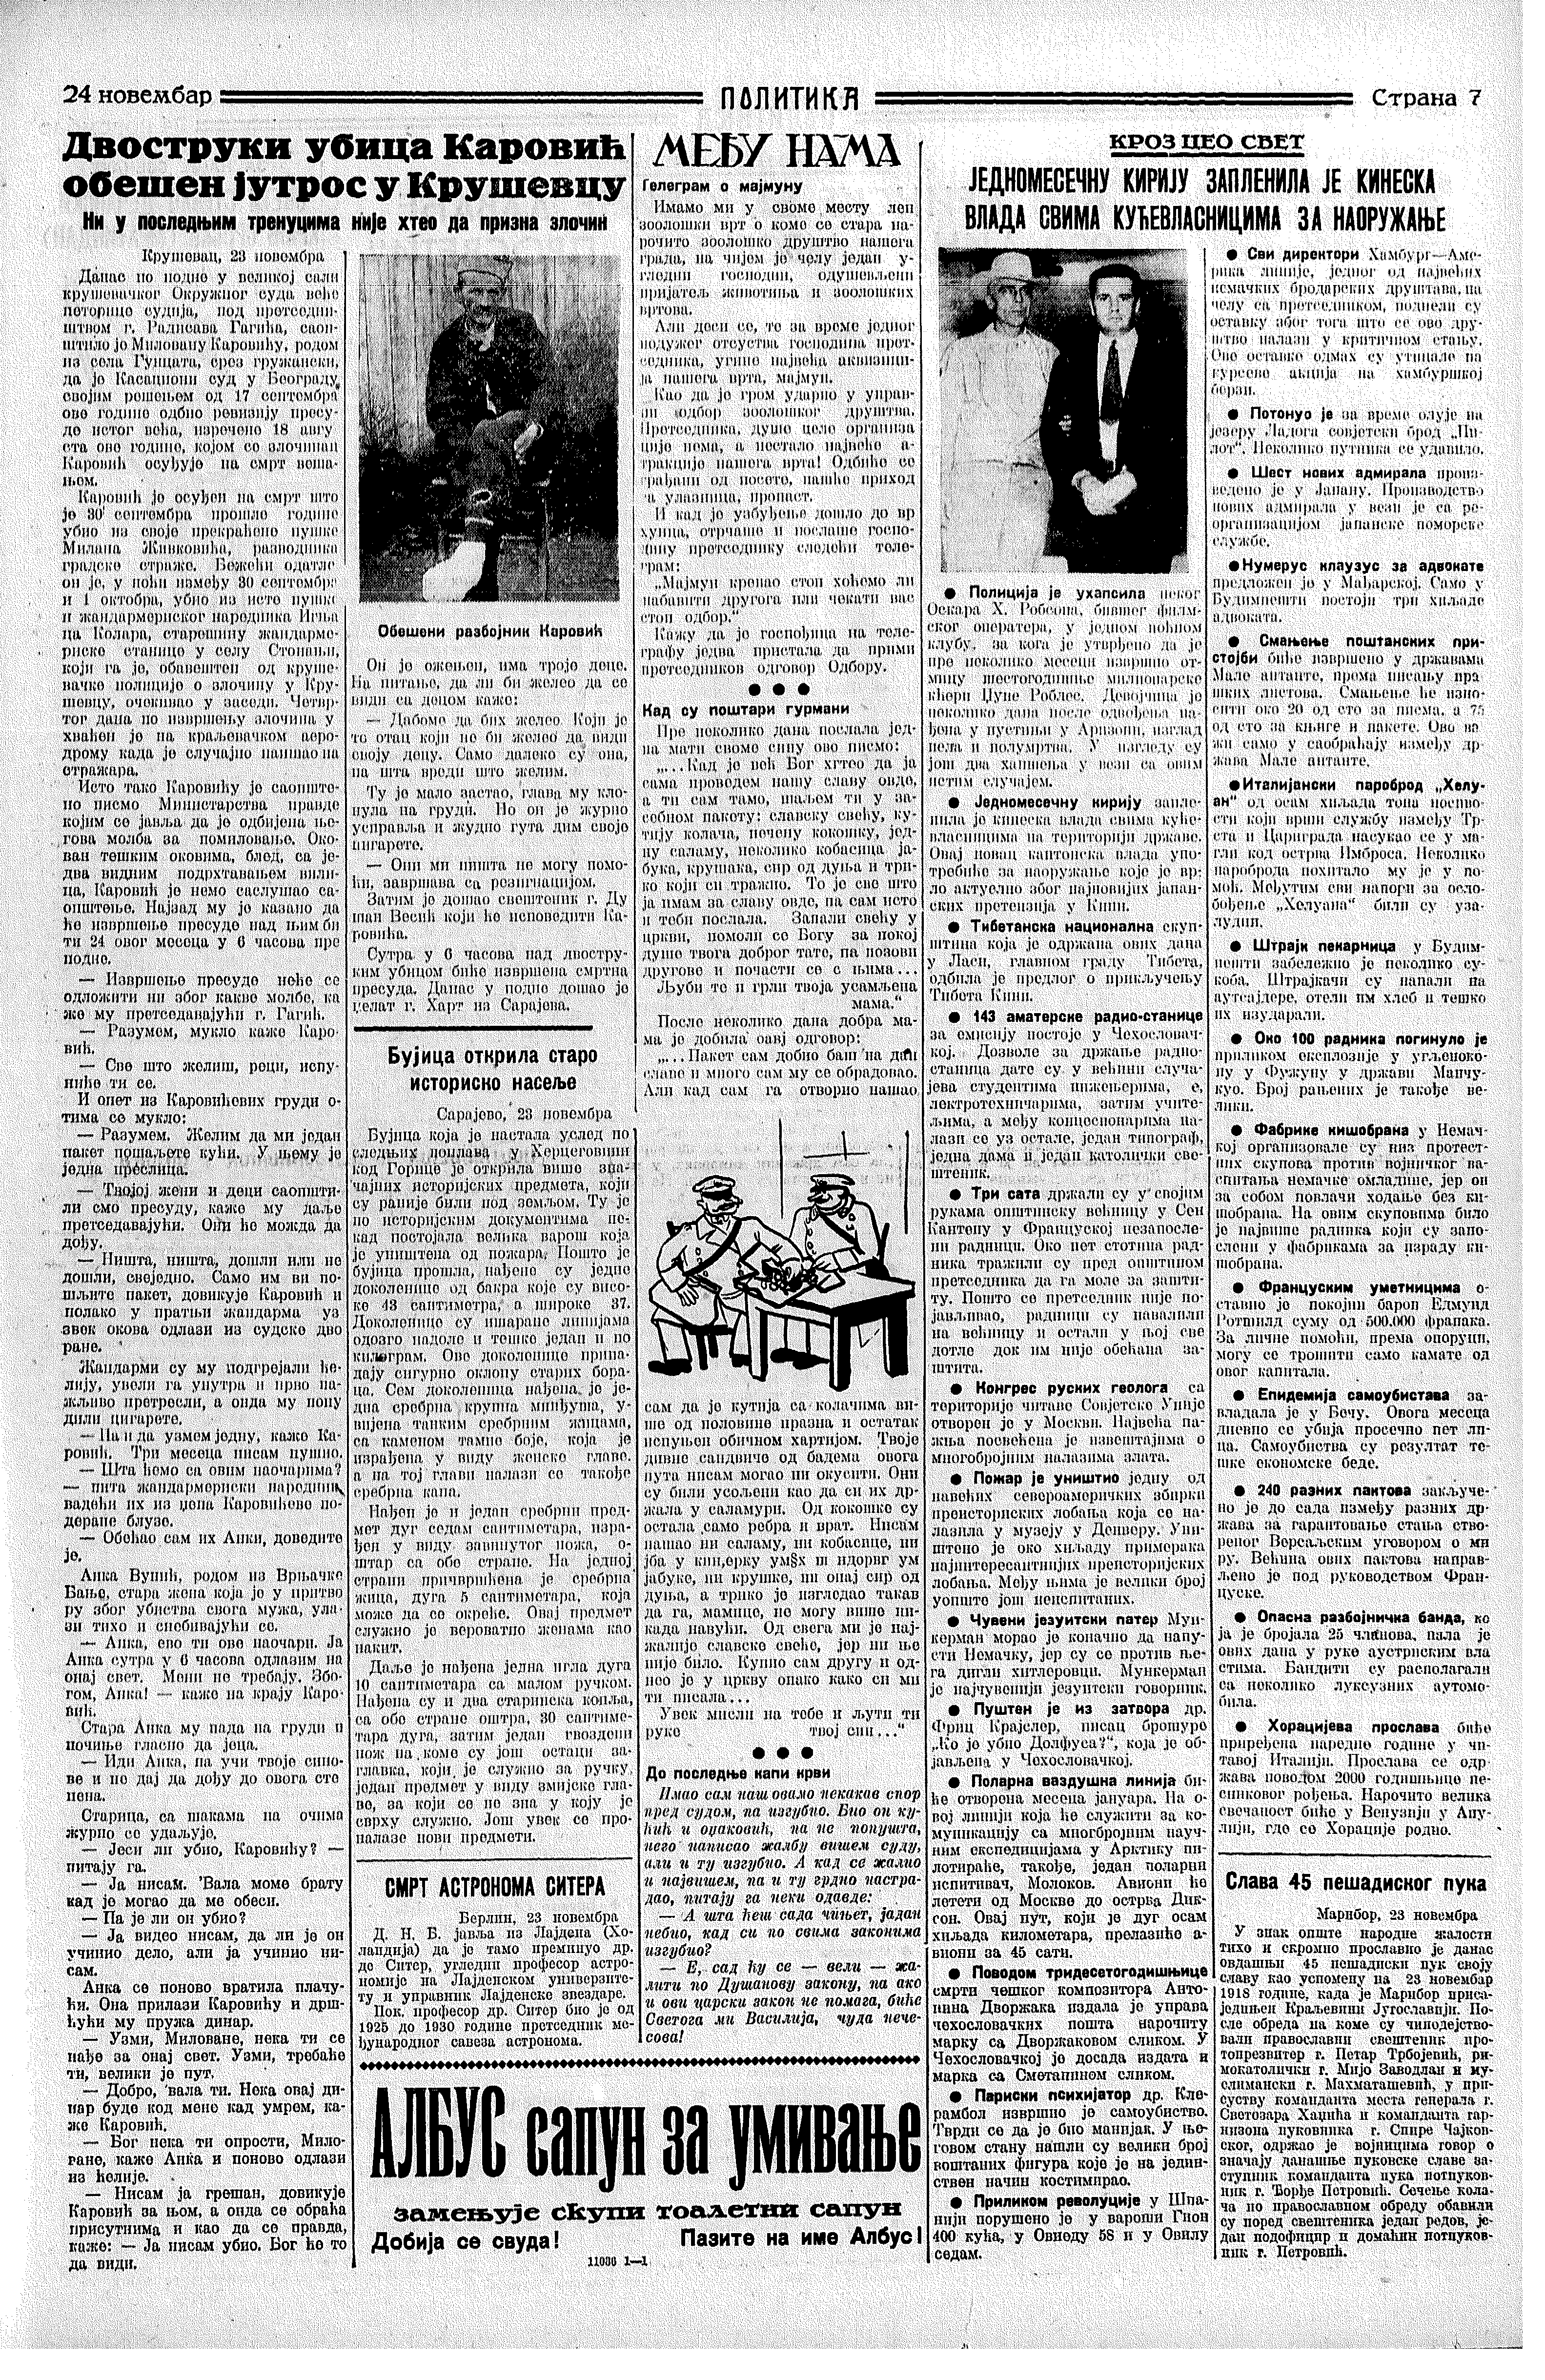 Dvostruki ubica obešen, Politika, 24.11.1934.